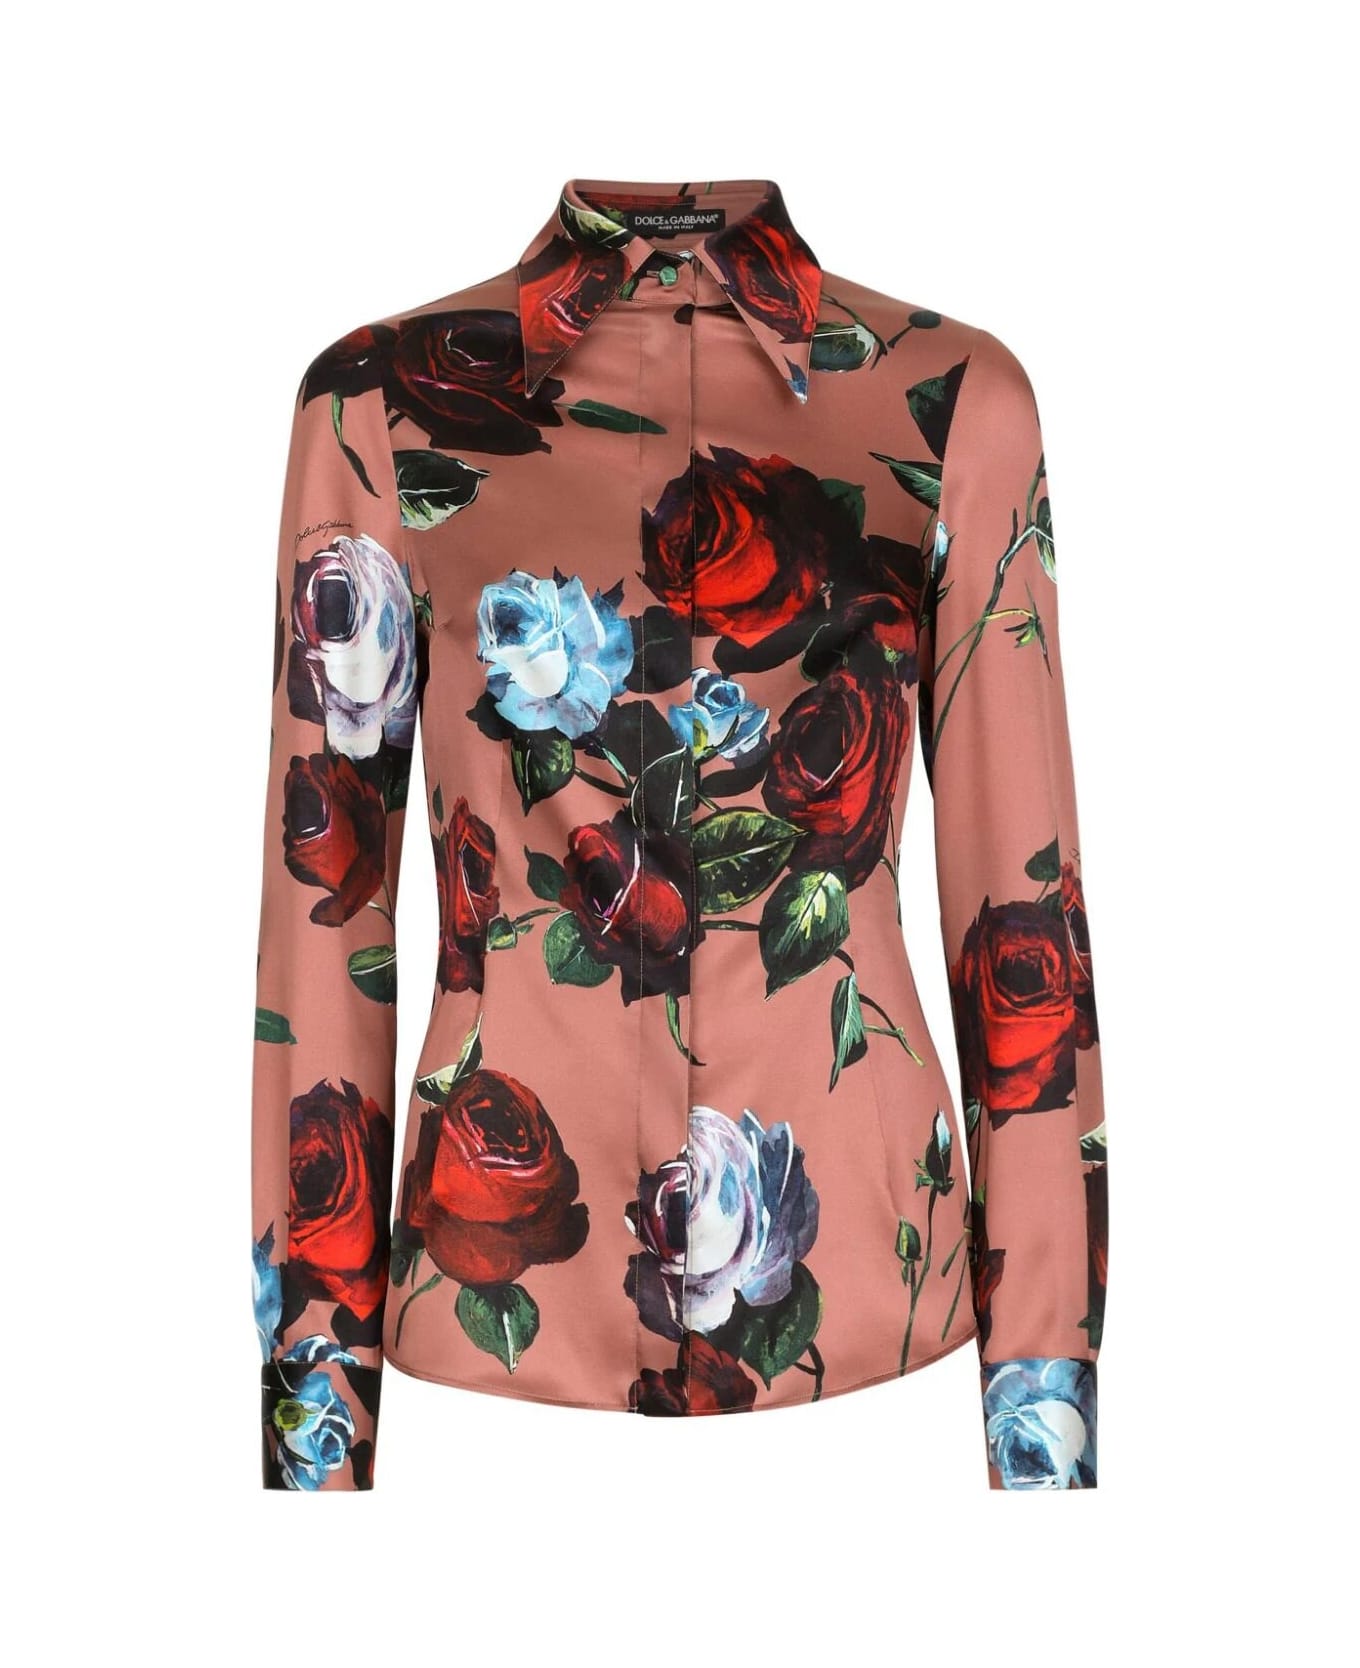 Dolce & Gabbana Camicia St Rose Vintage - Ayt Fondo Rosa シャツ